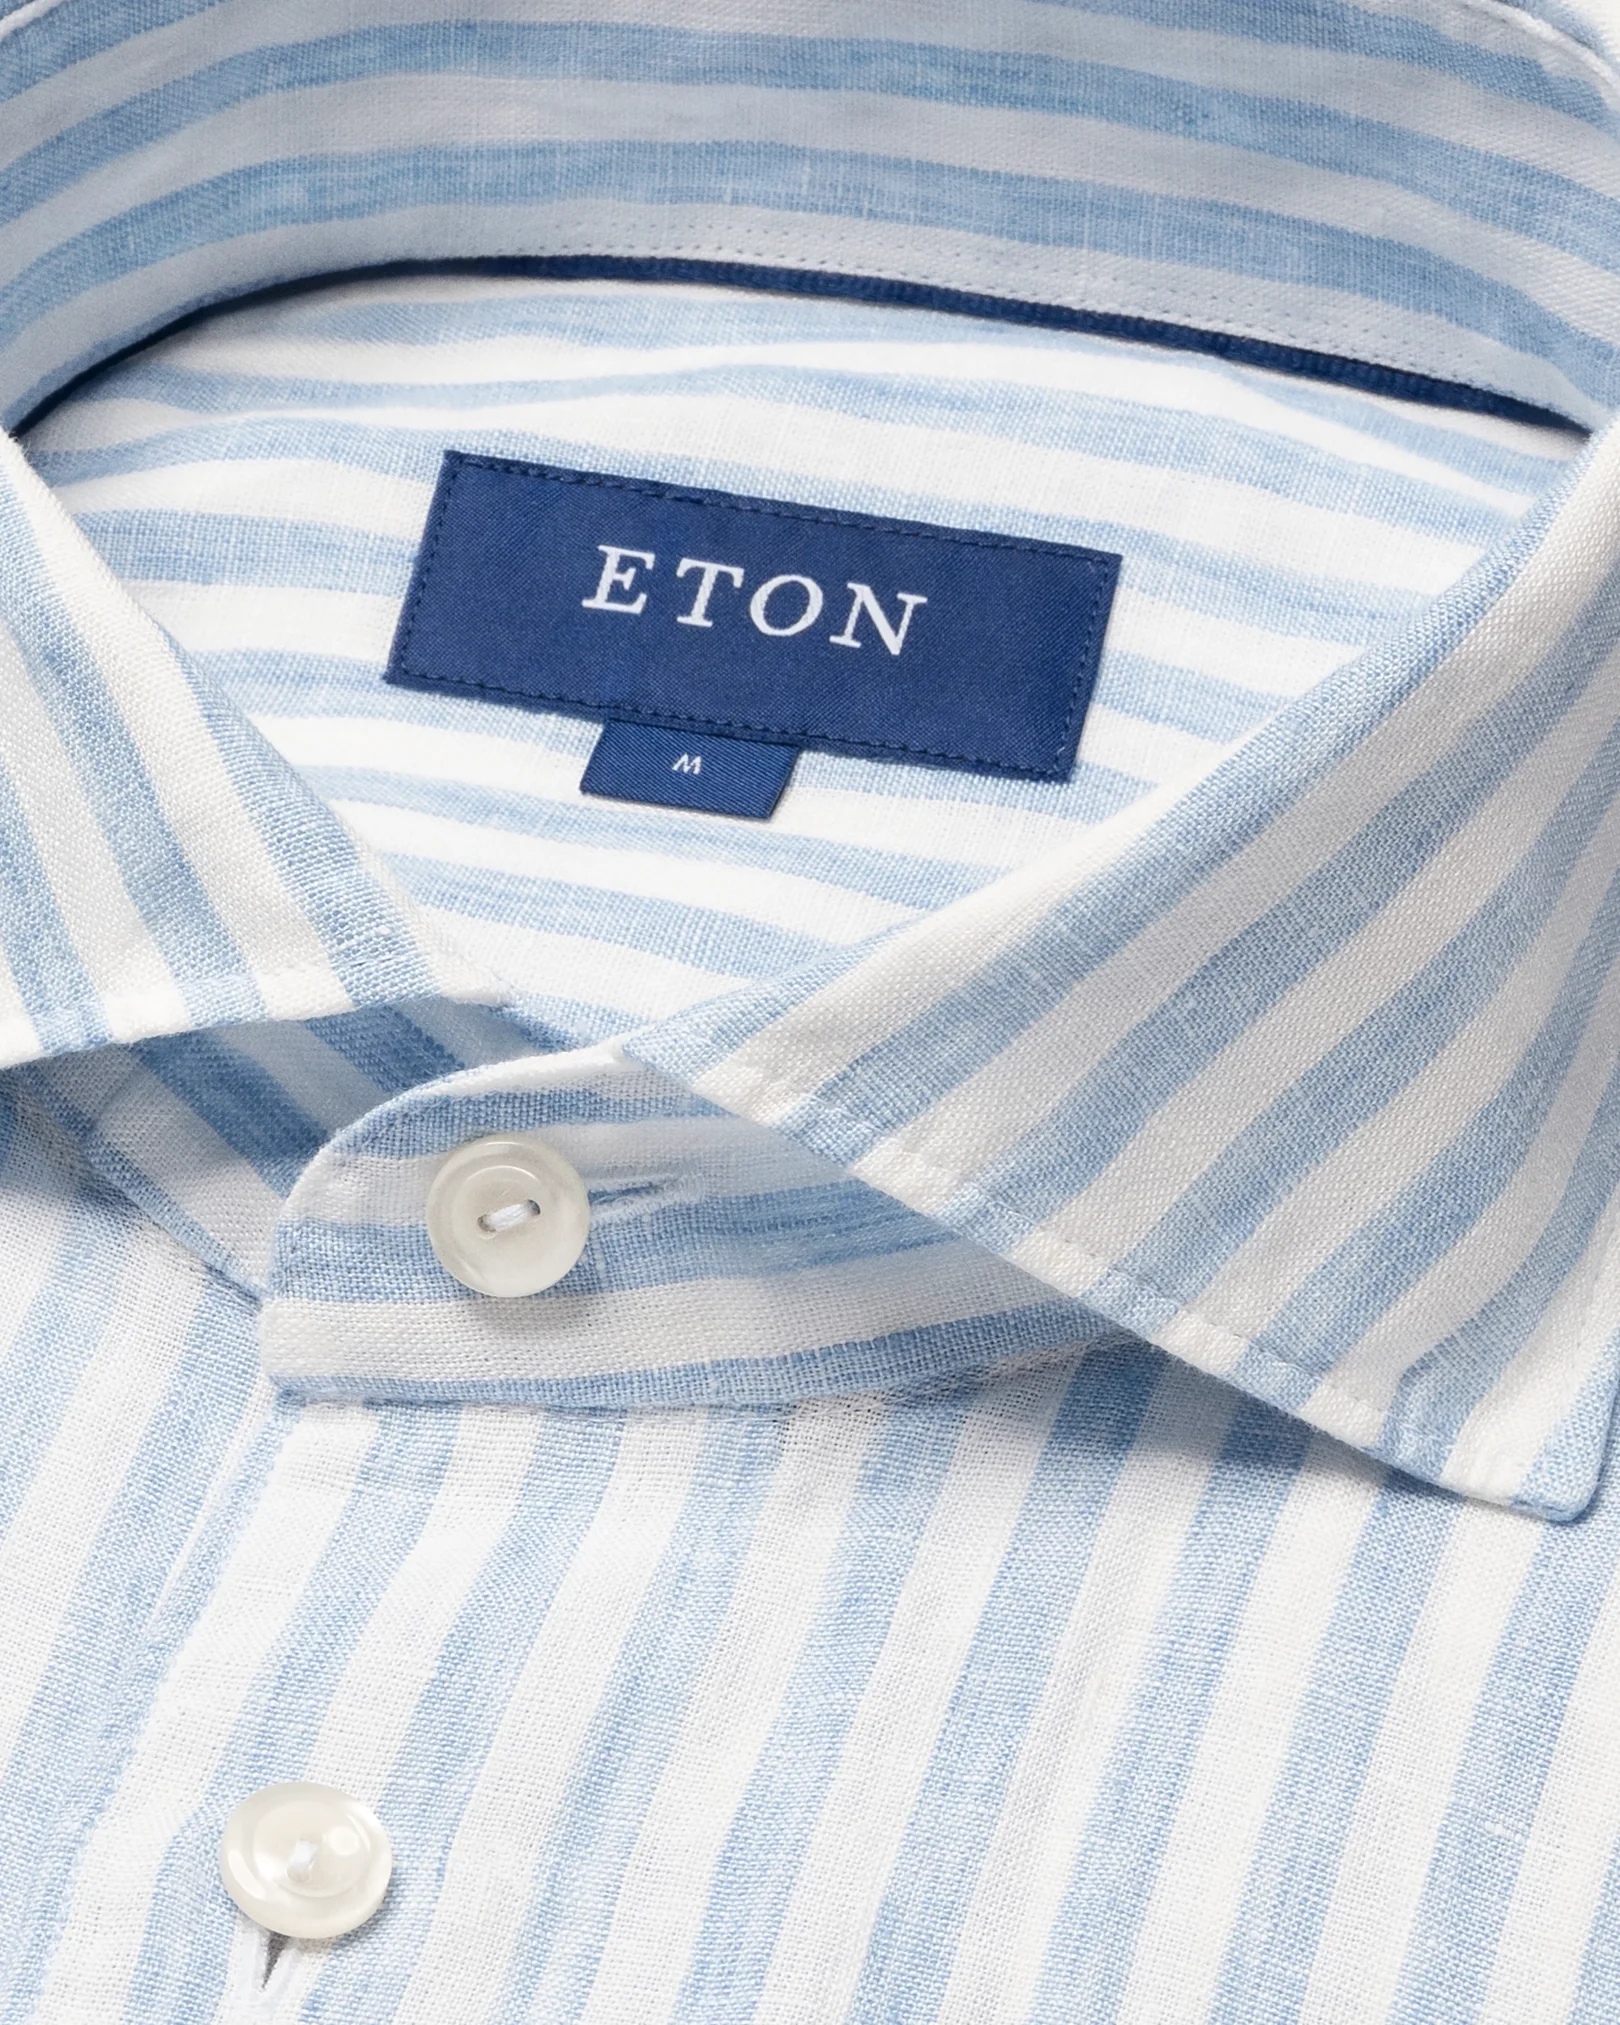 Eton - wide striped linen shirt